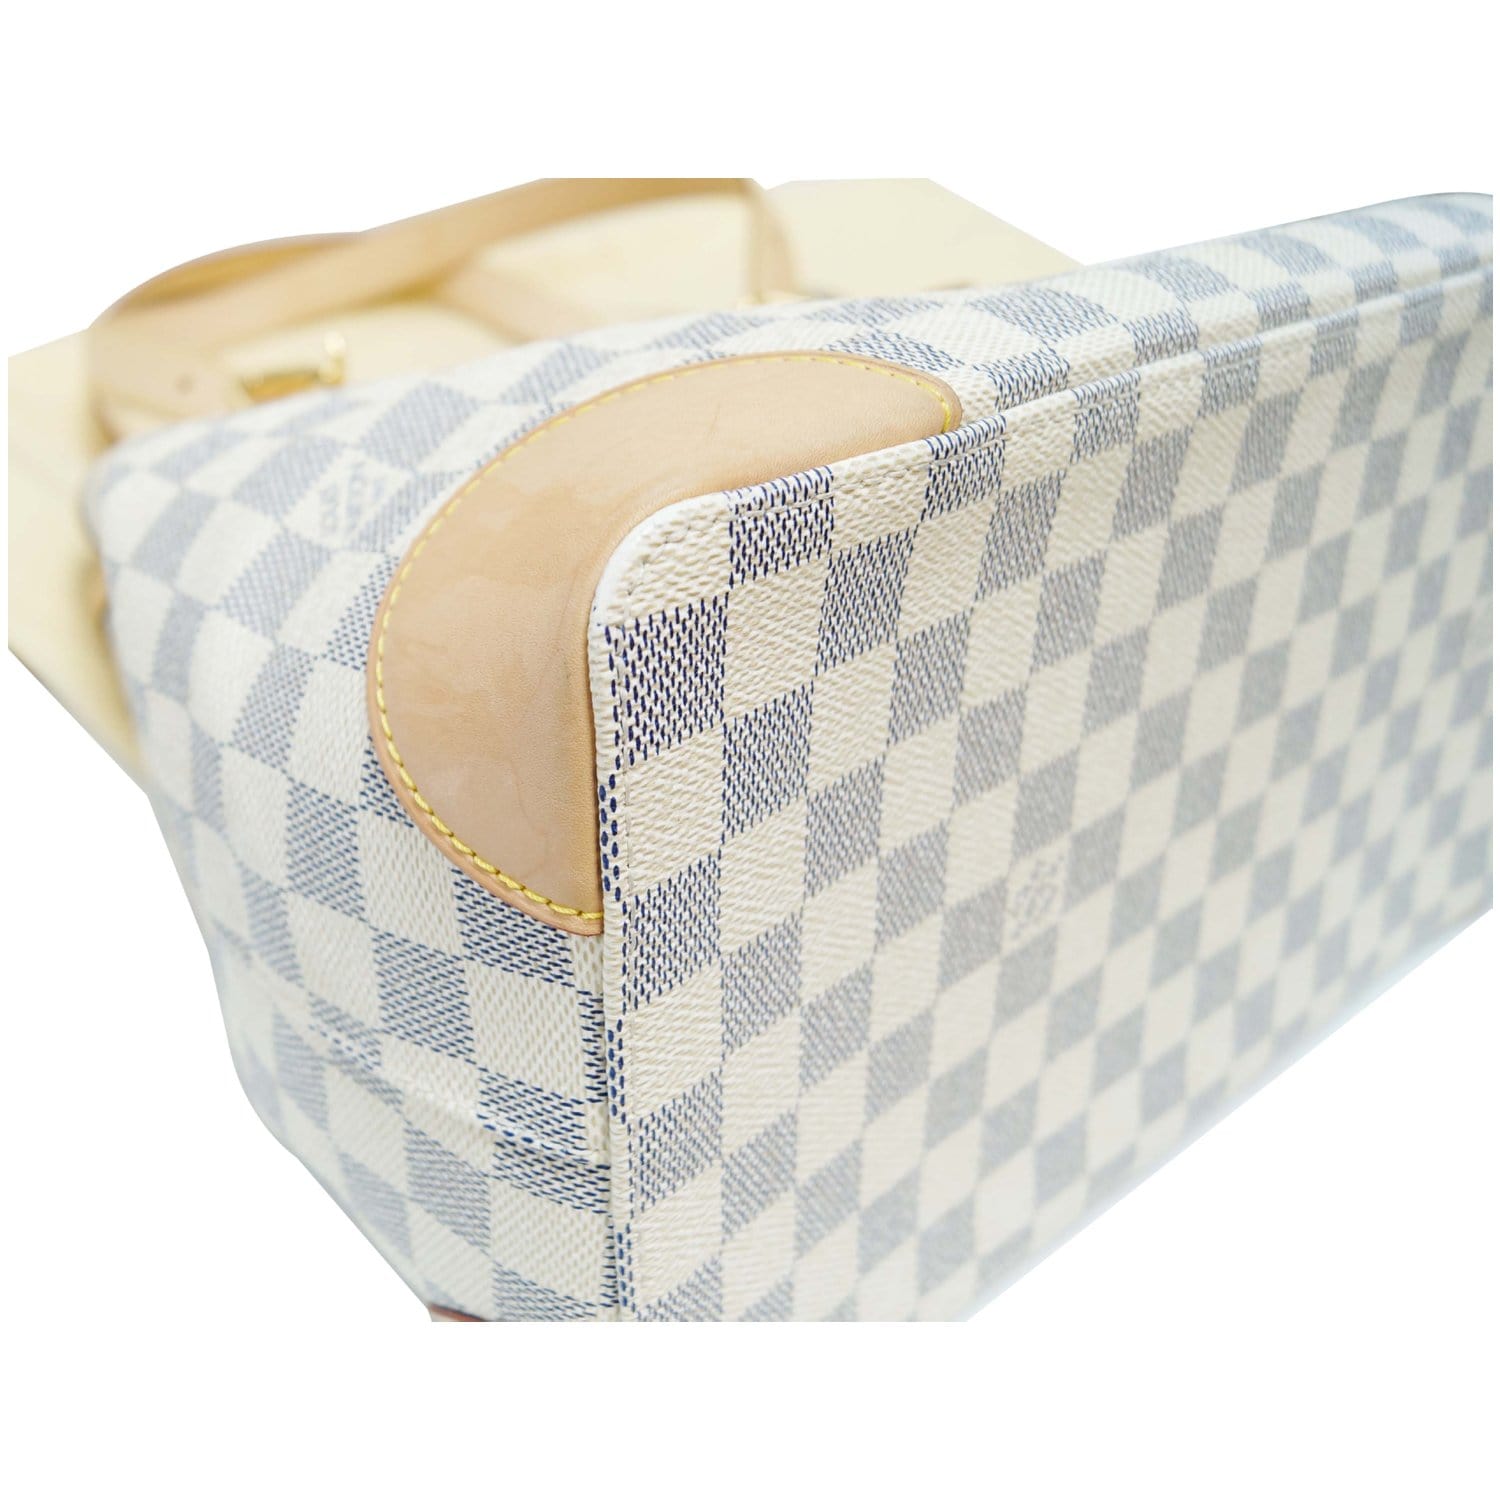 White Louis Vuitton Damier Azur Hampstead PM Tote Bag – Designer